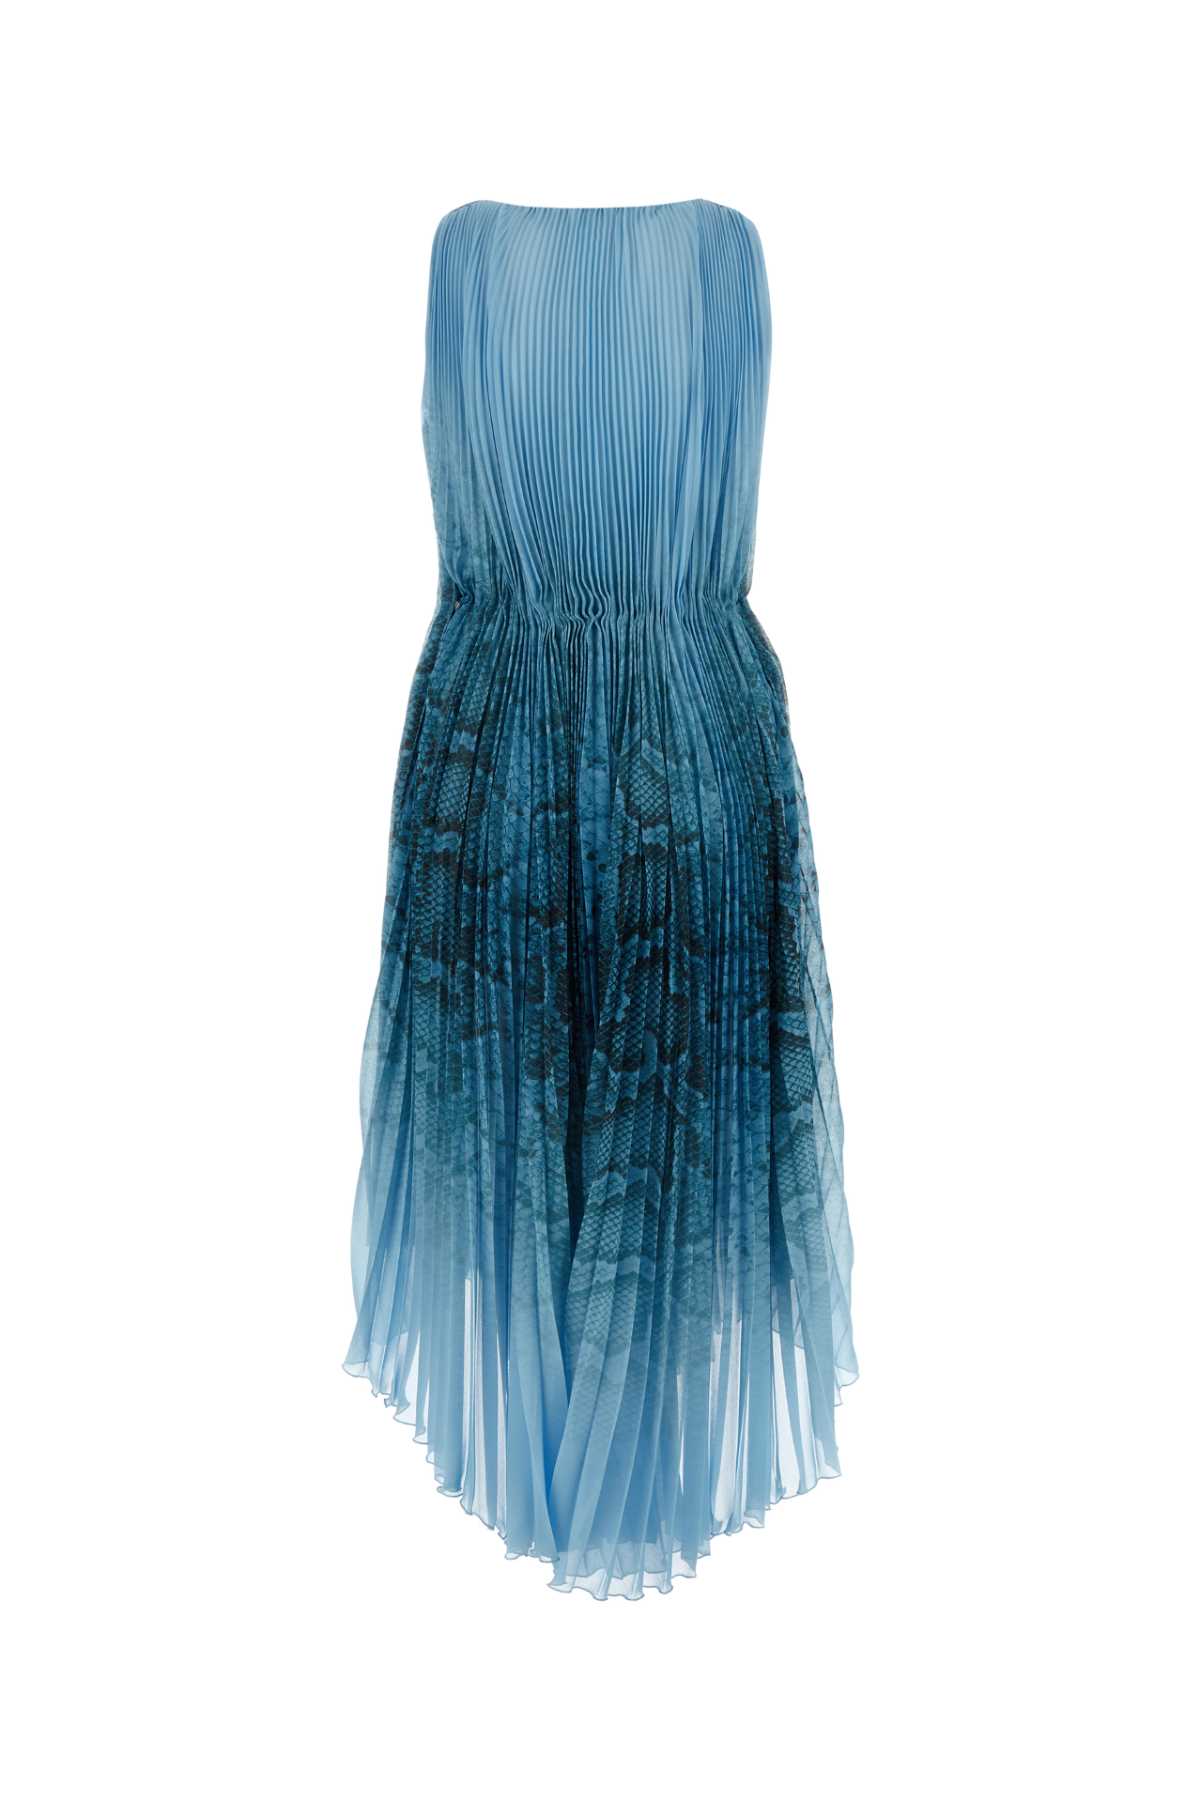 Ermanno Scervino Light Blue Polyester Dress In Stpitonea